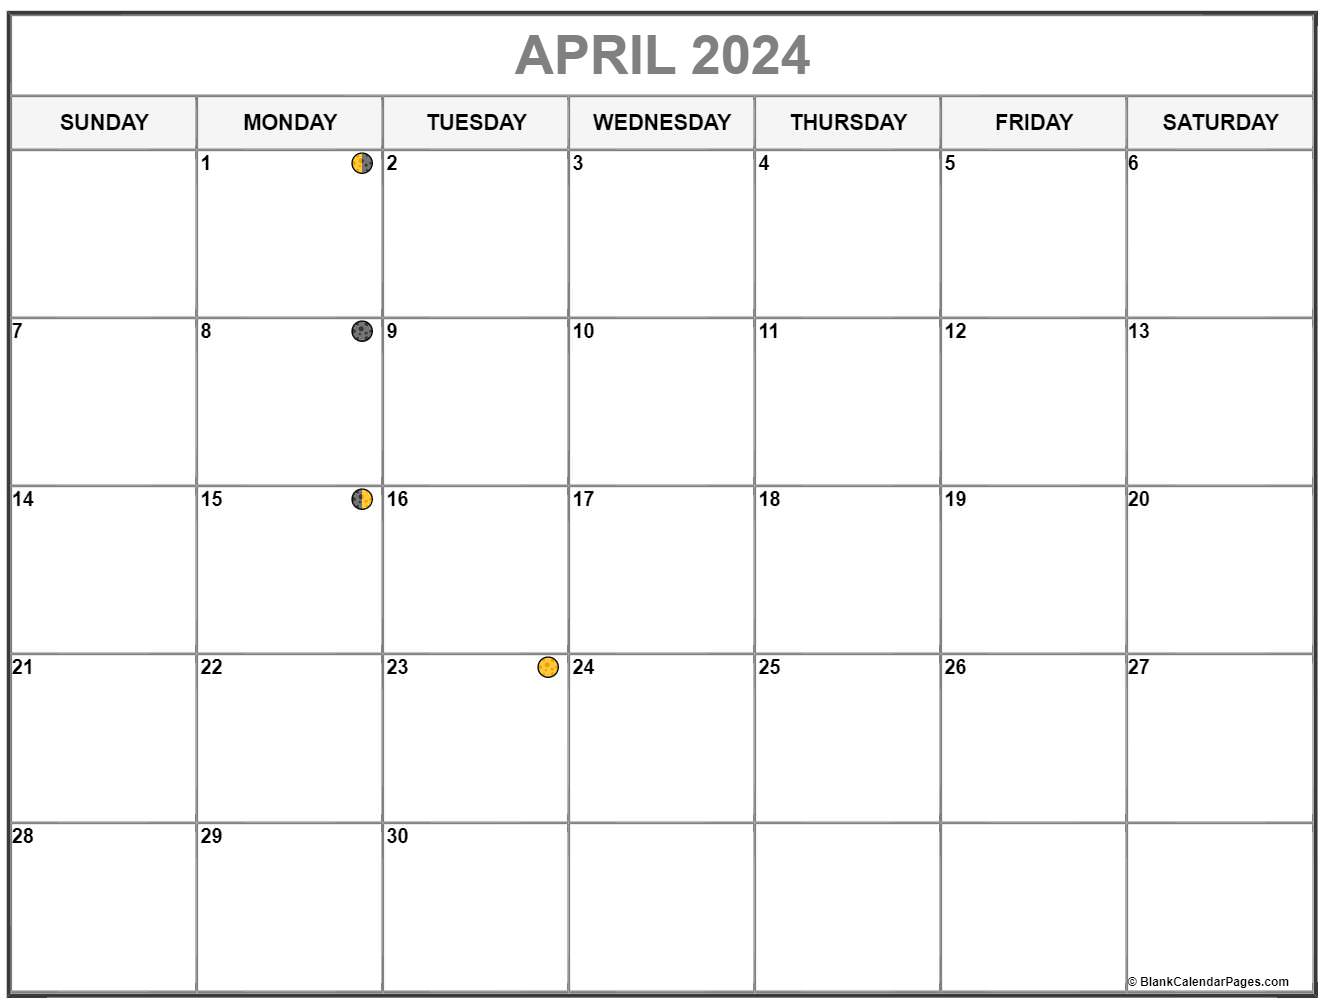 Lunar Calendar October 2022